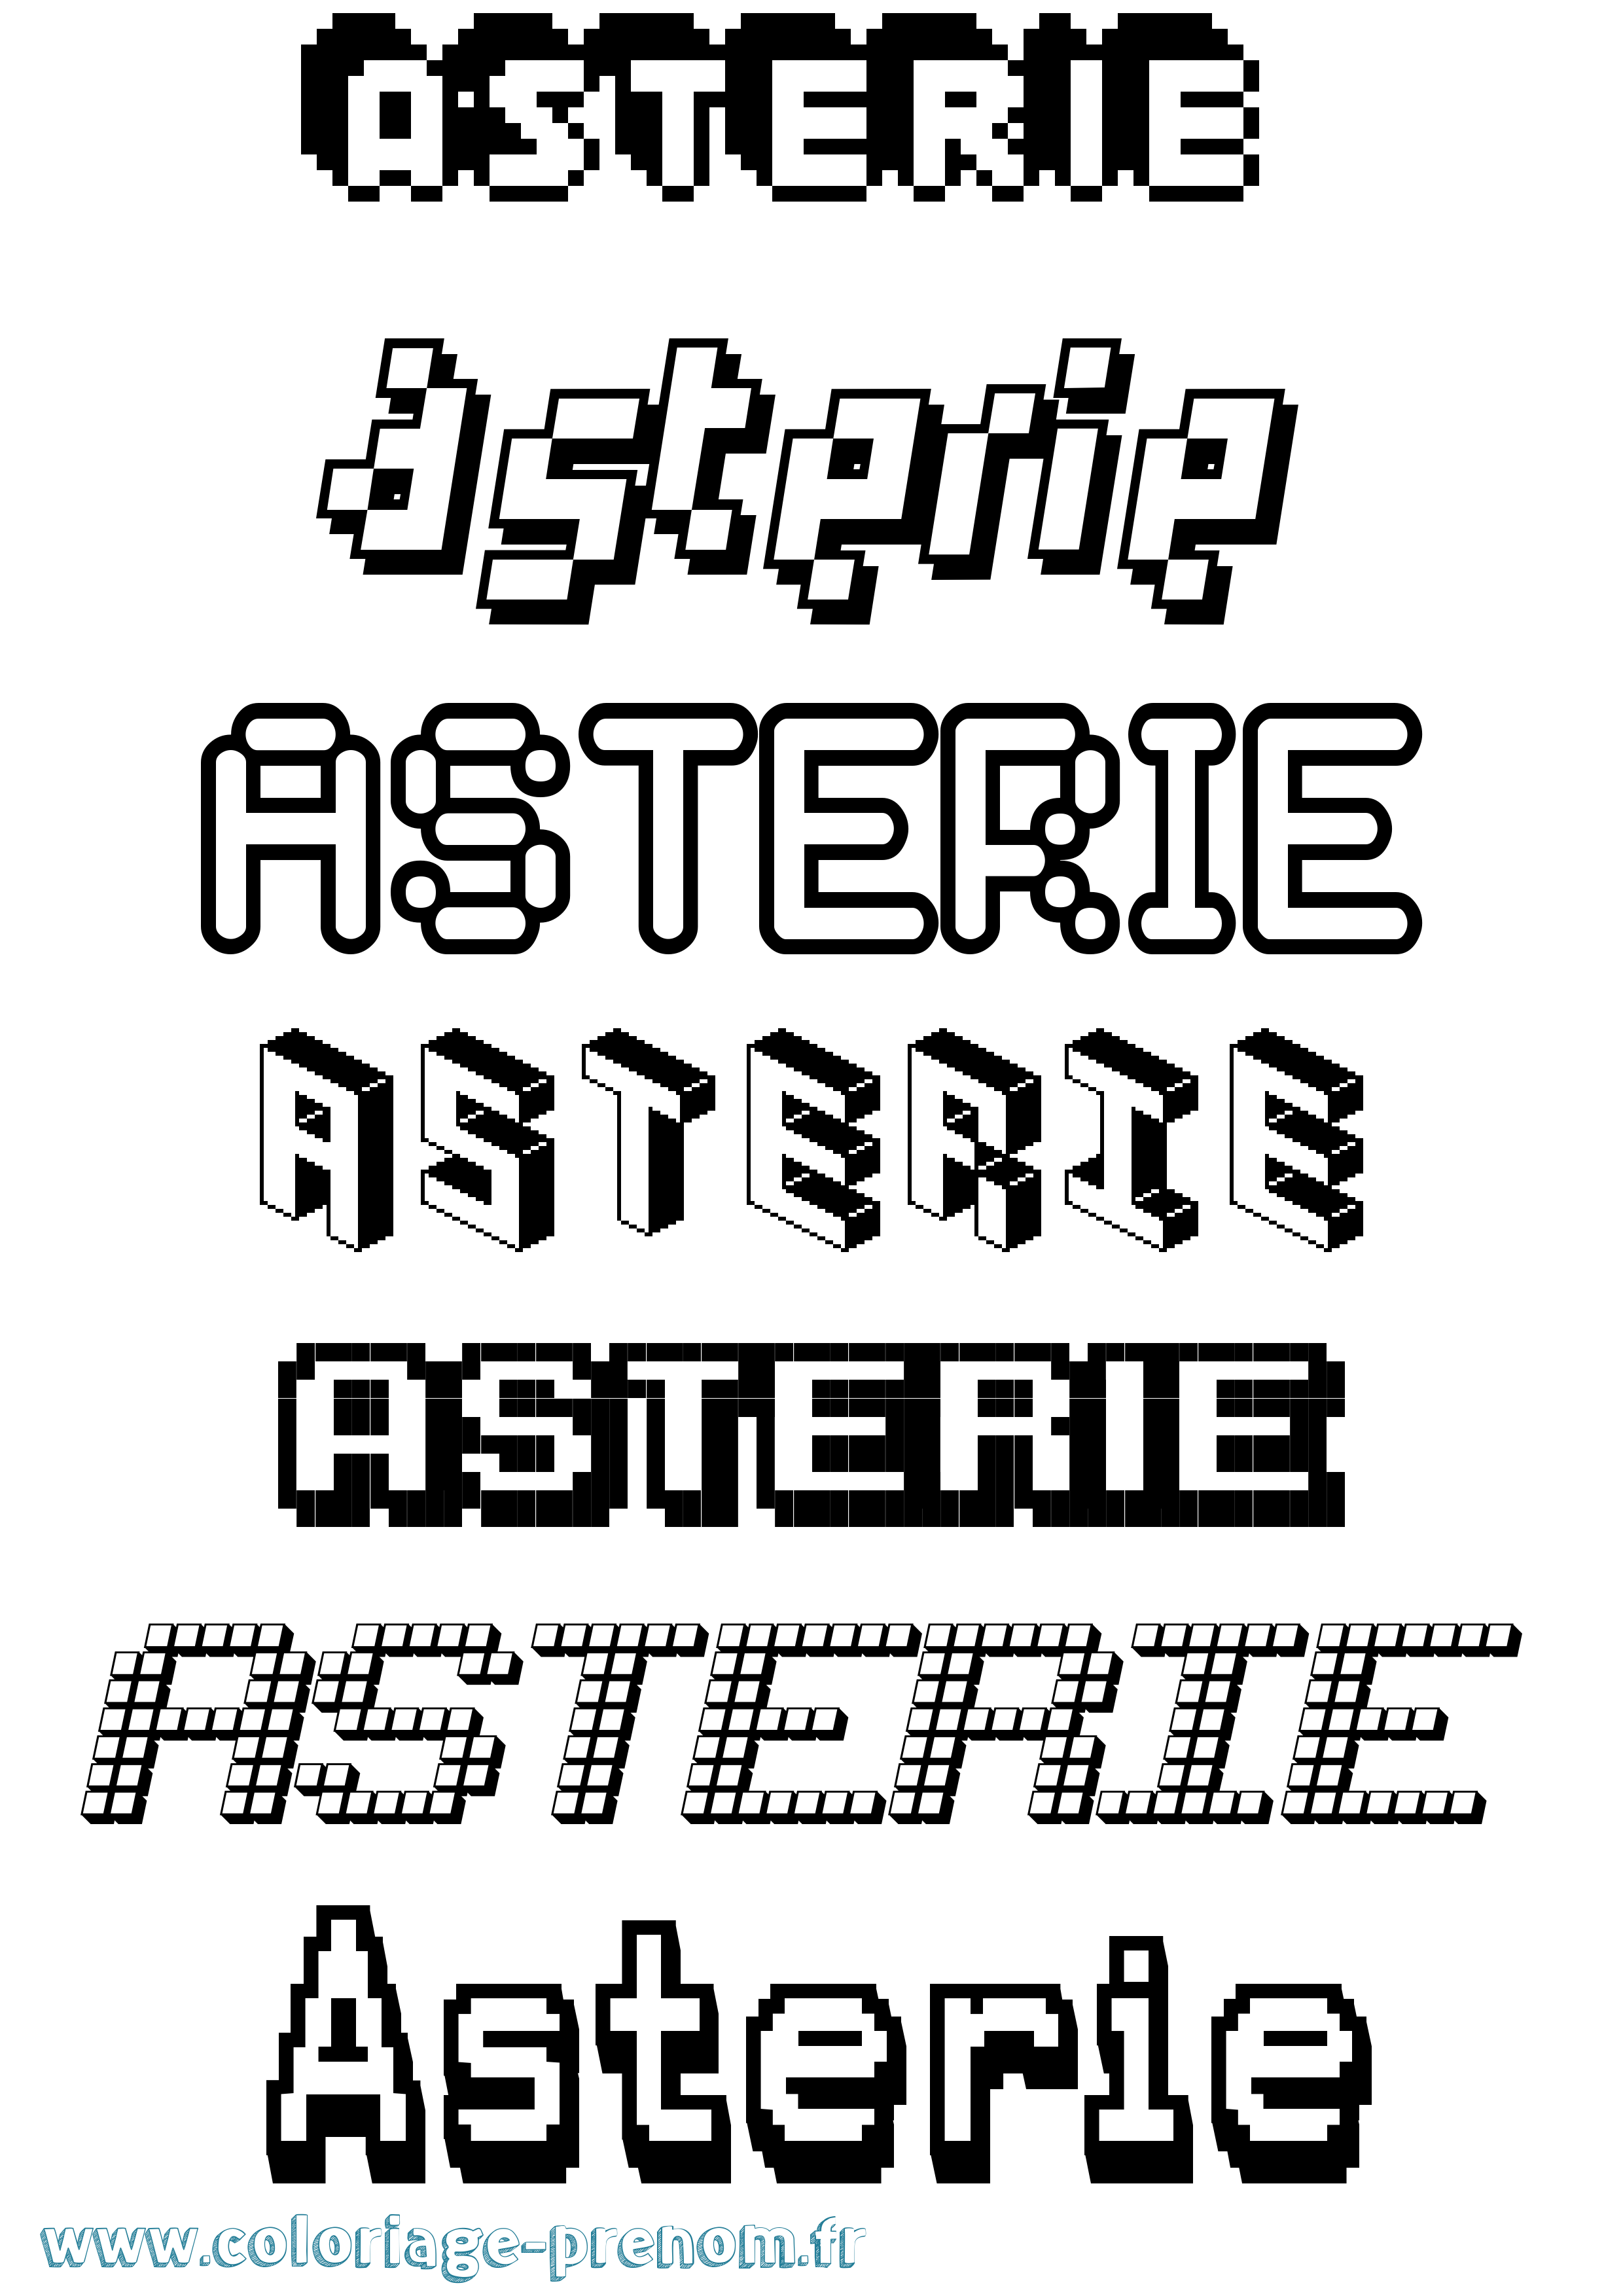 Coloriage prénom Asterie Pixel